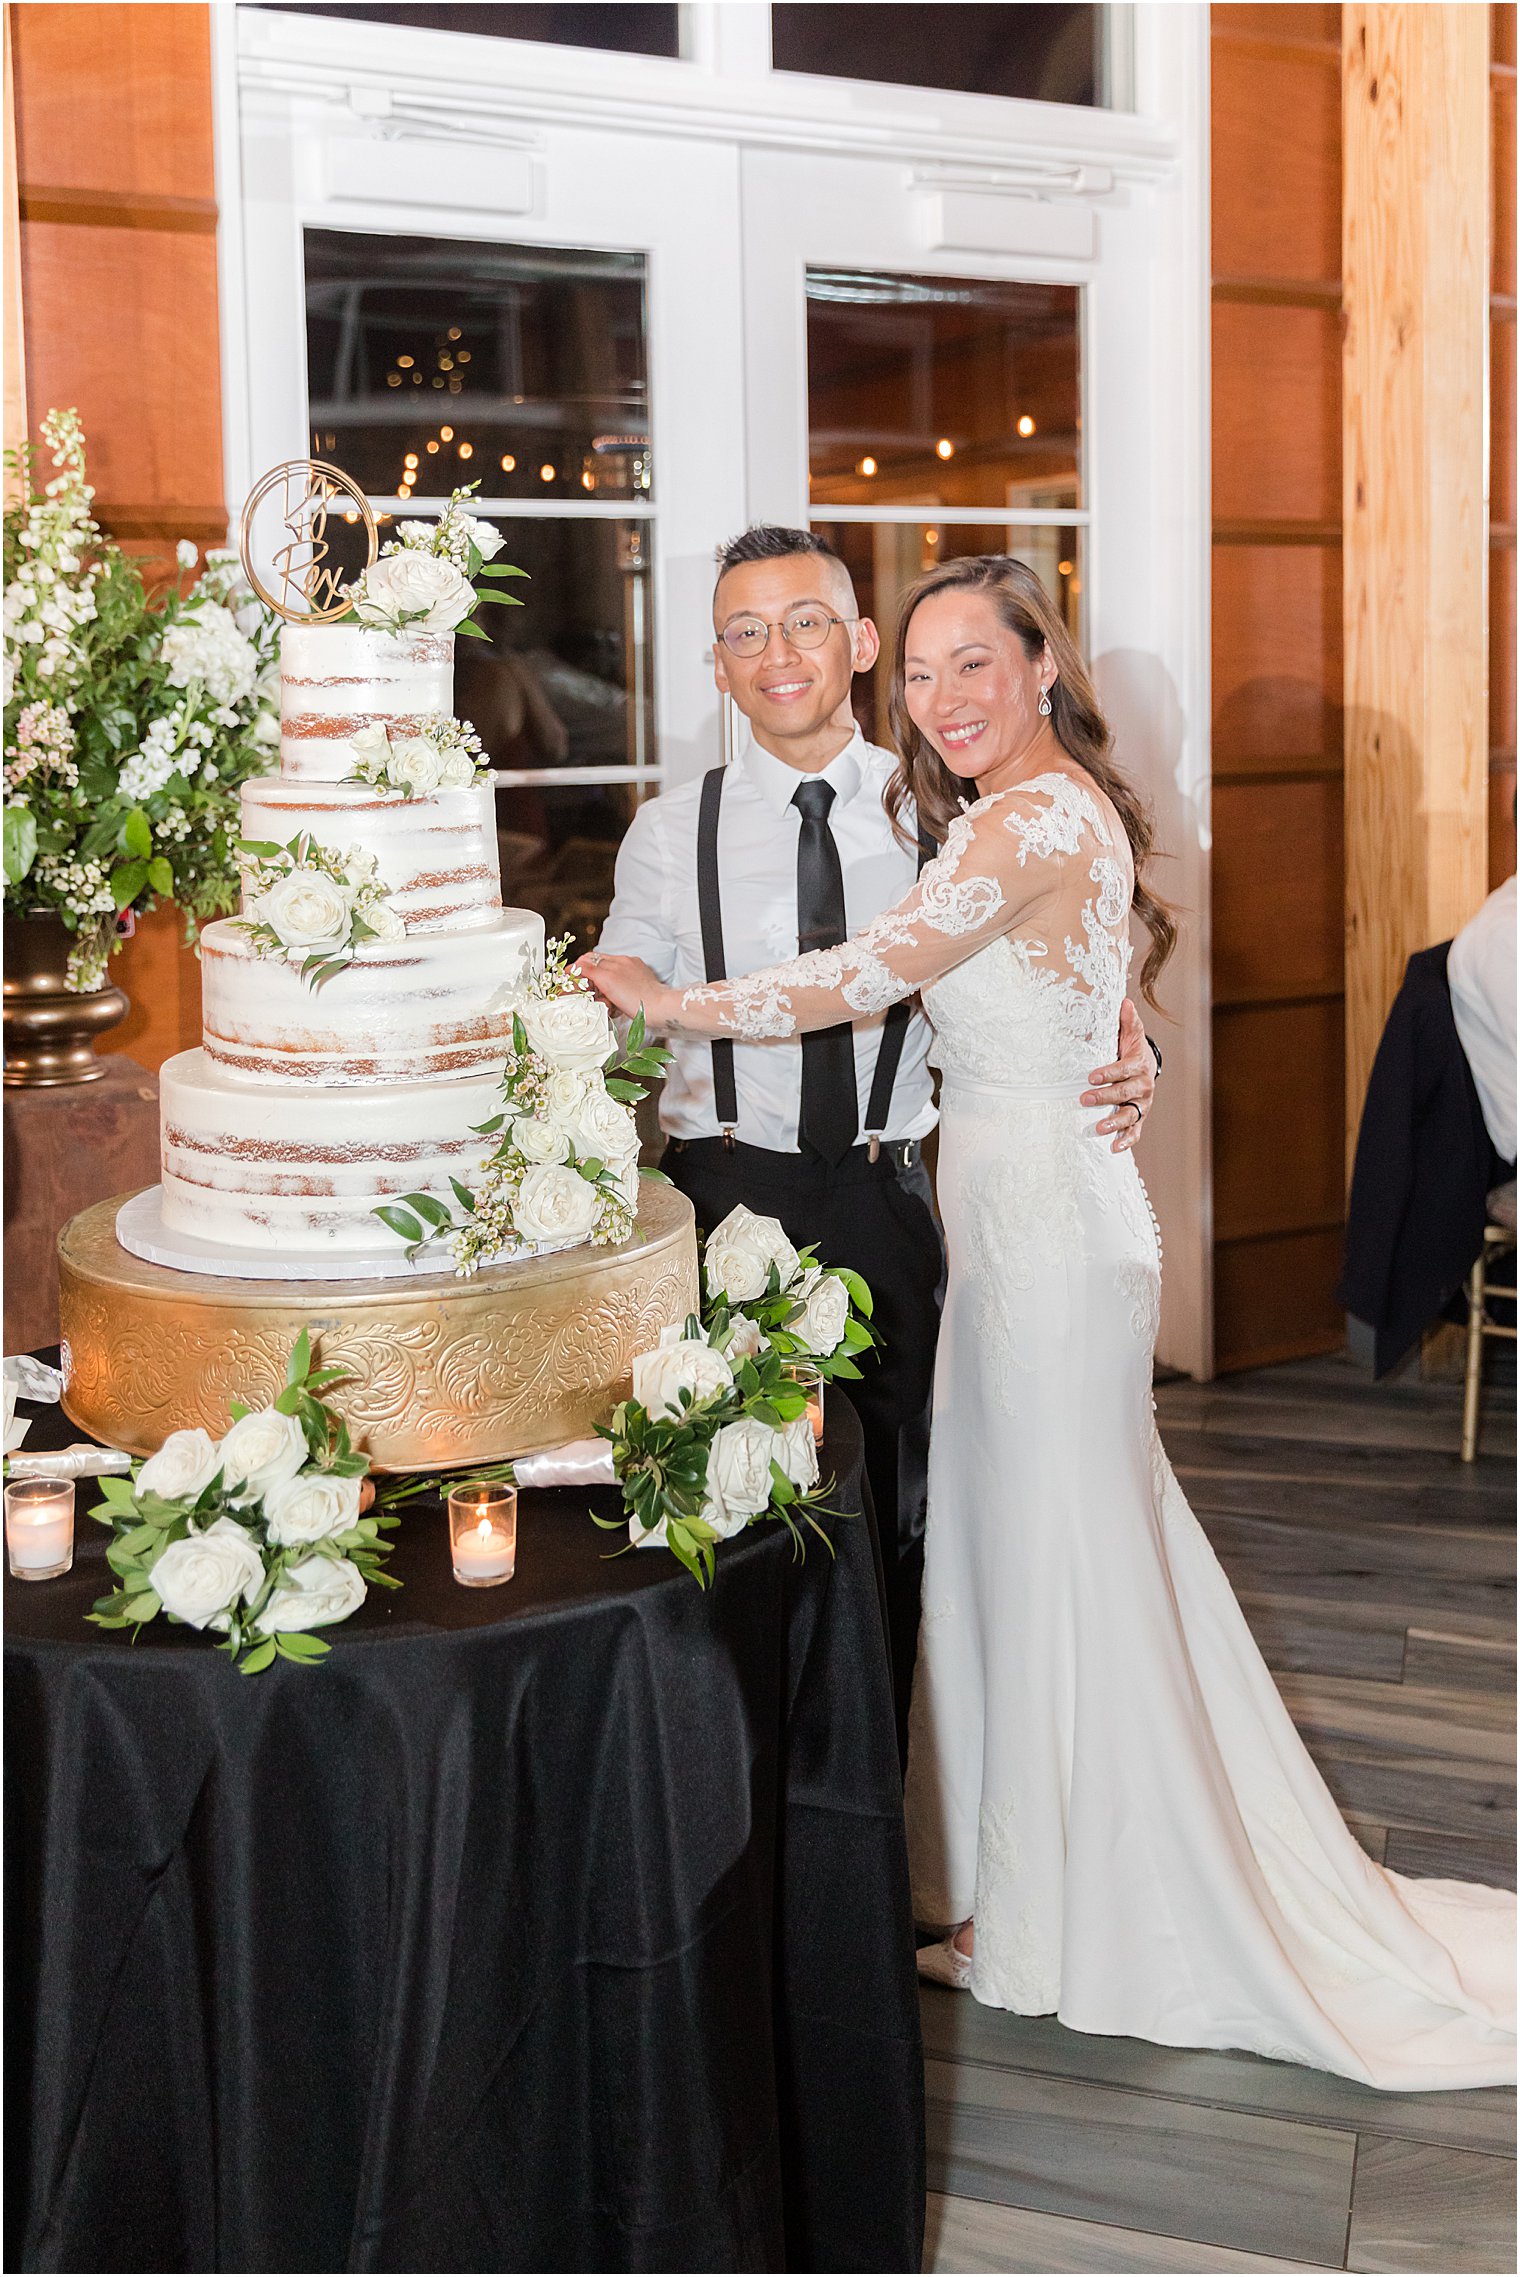 couple cuts wedding cake at wedding reception